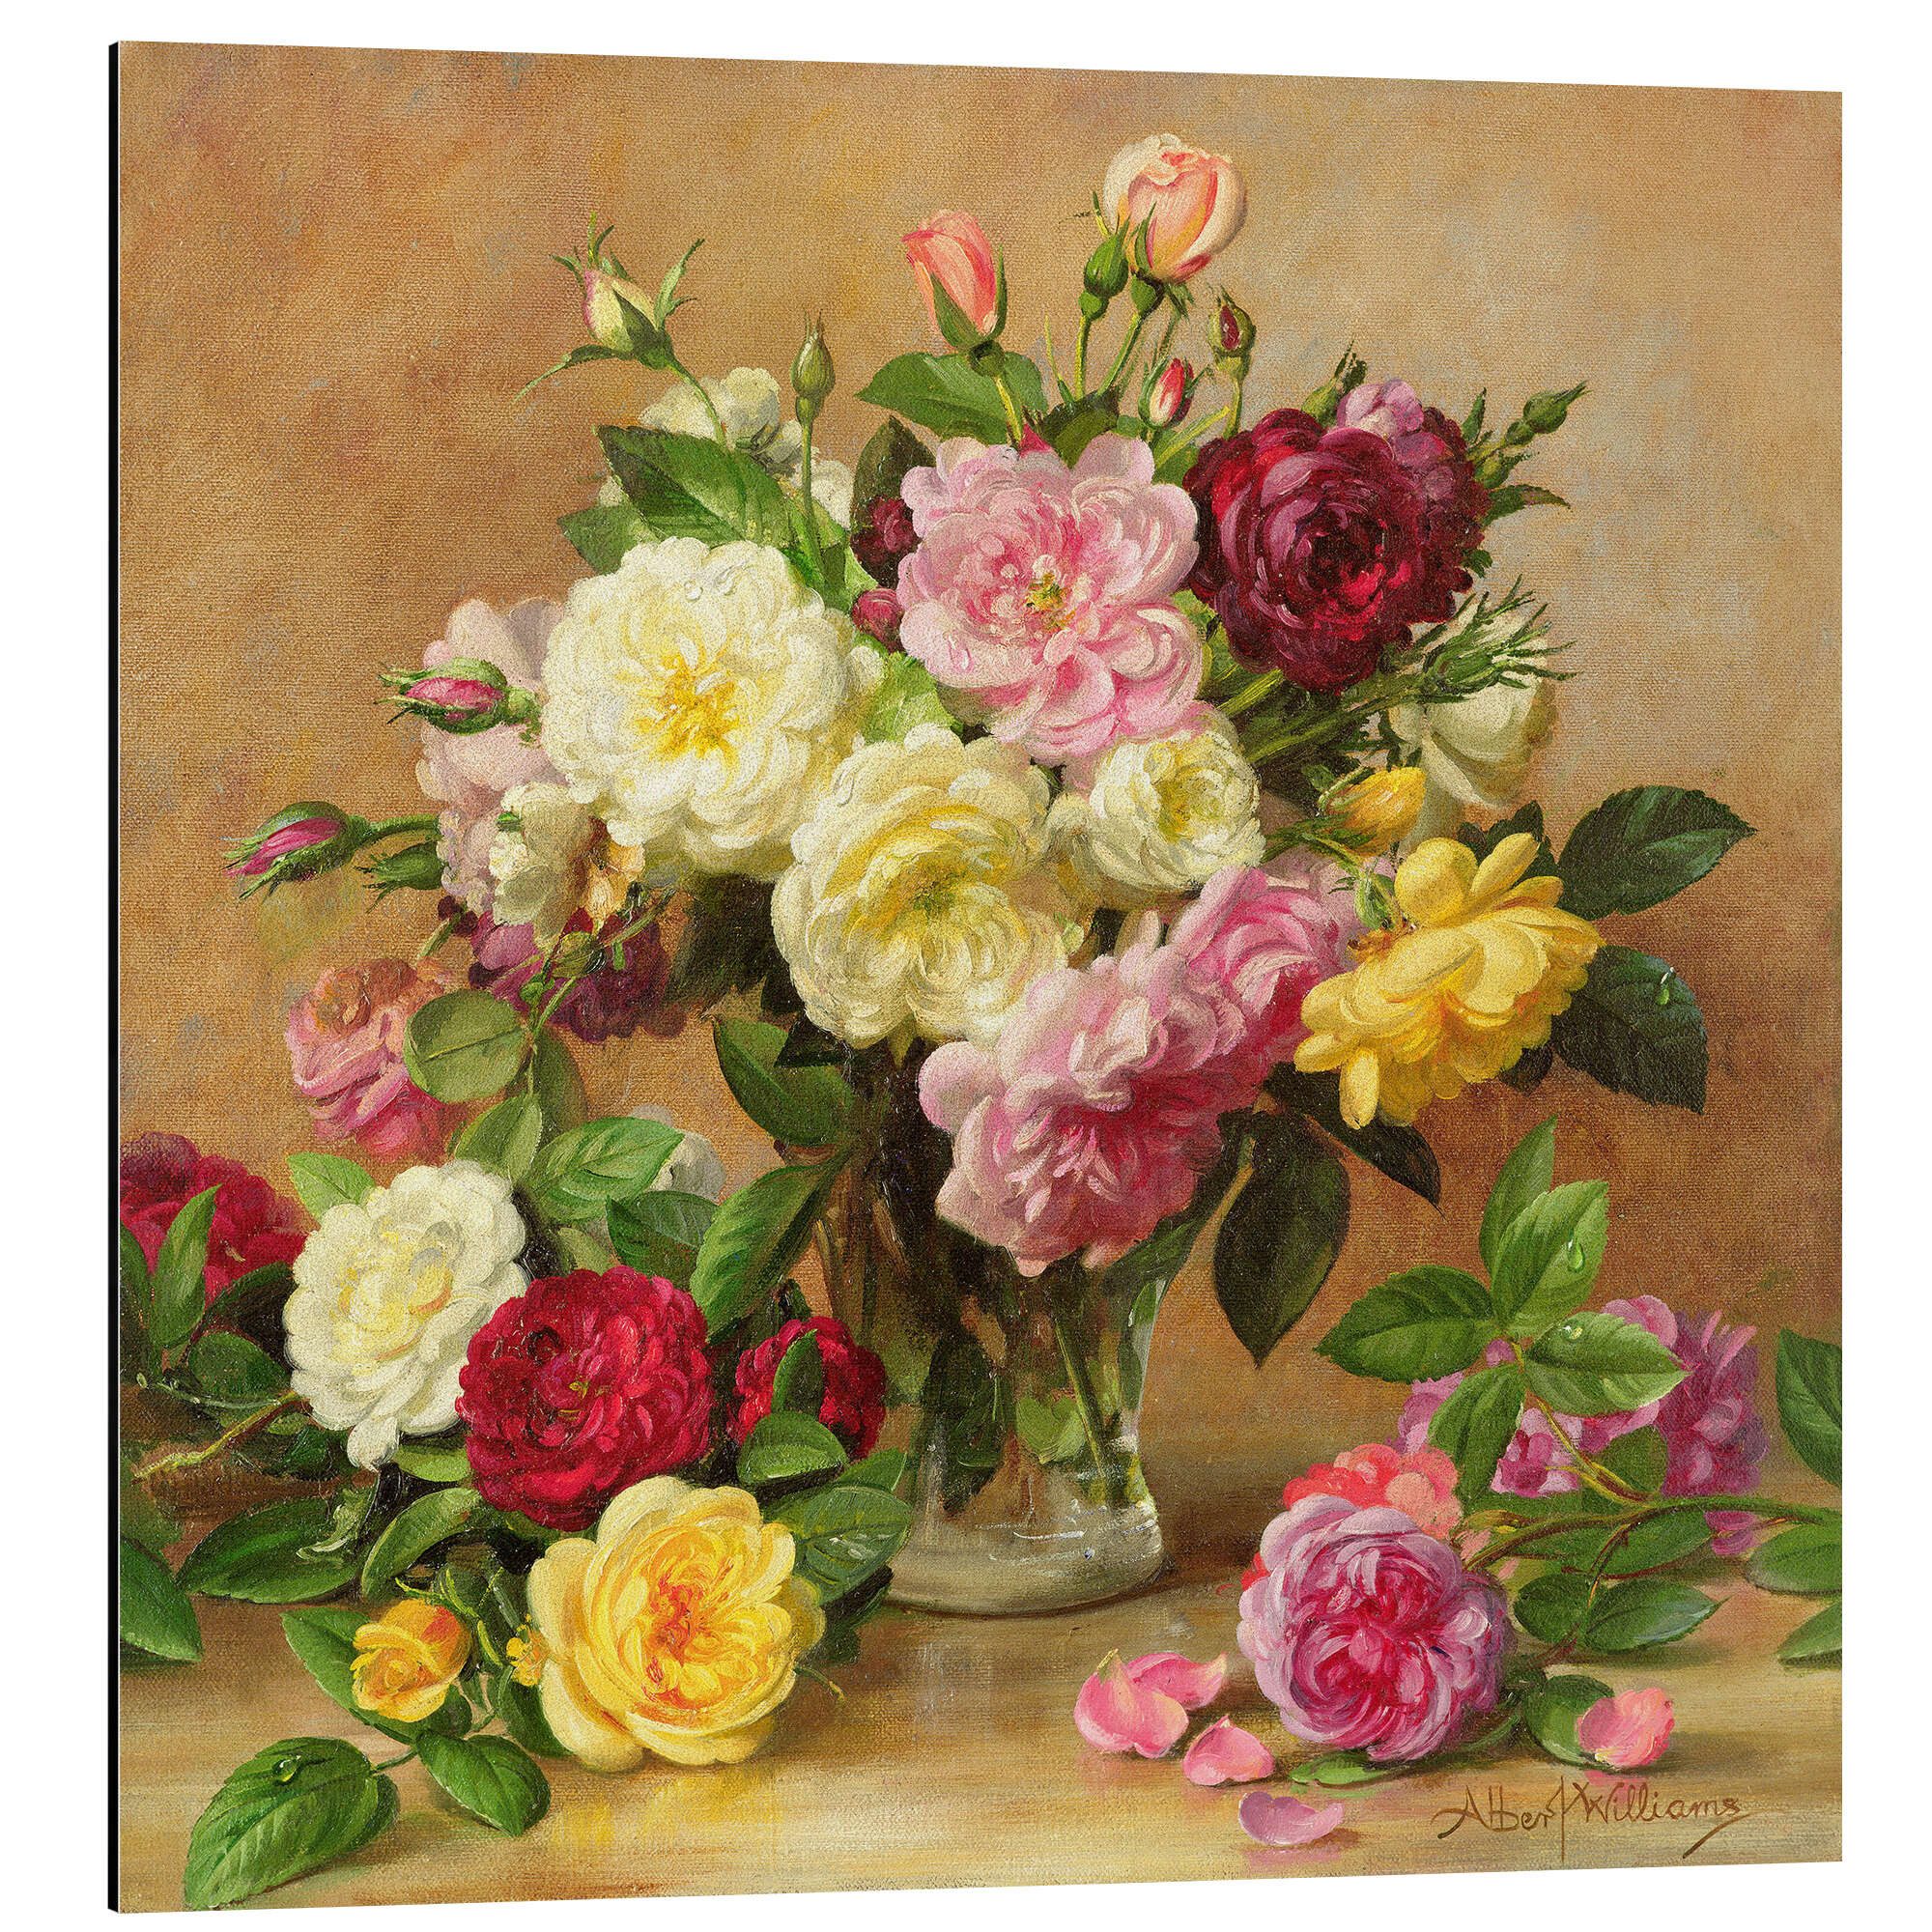 Posterlounge Alu-Dibond-Druck Albert Williams, Altmodische viktorianische Rosen, Malerei